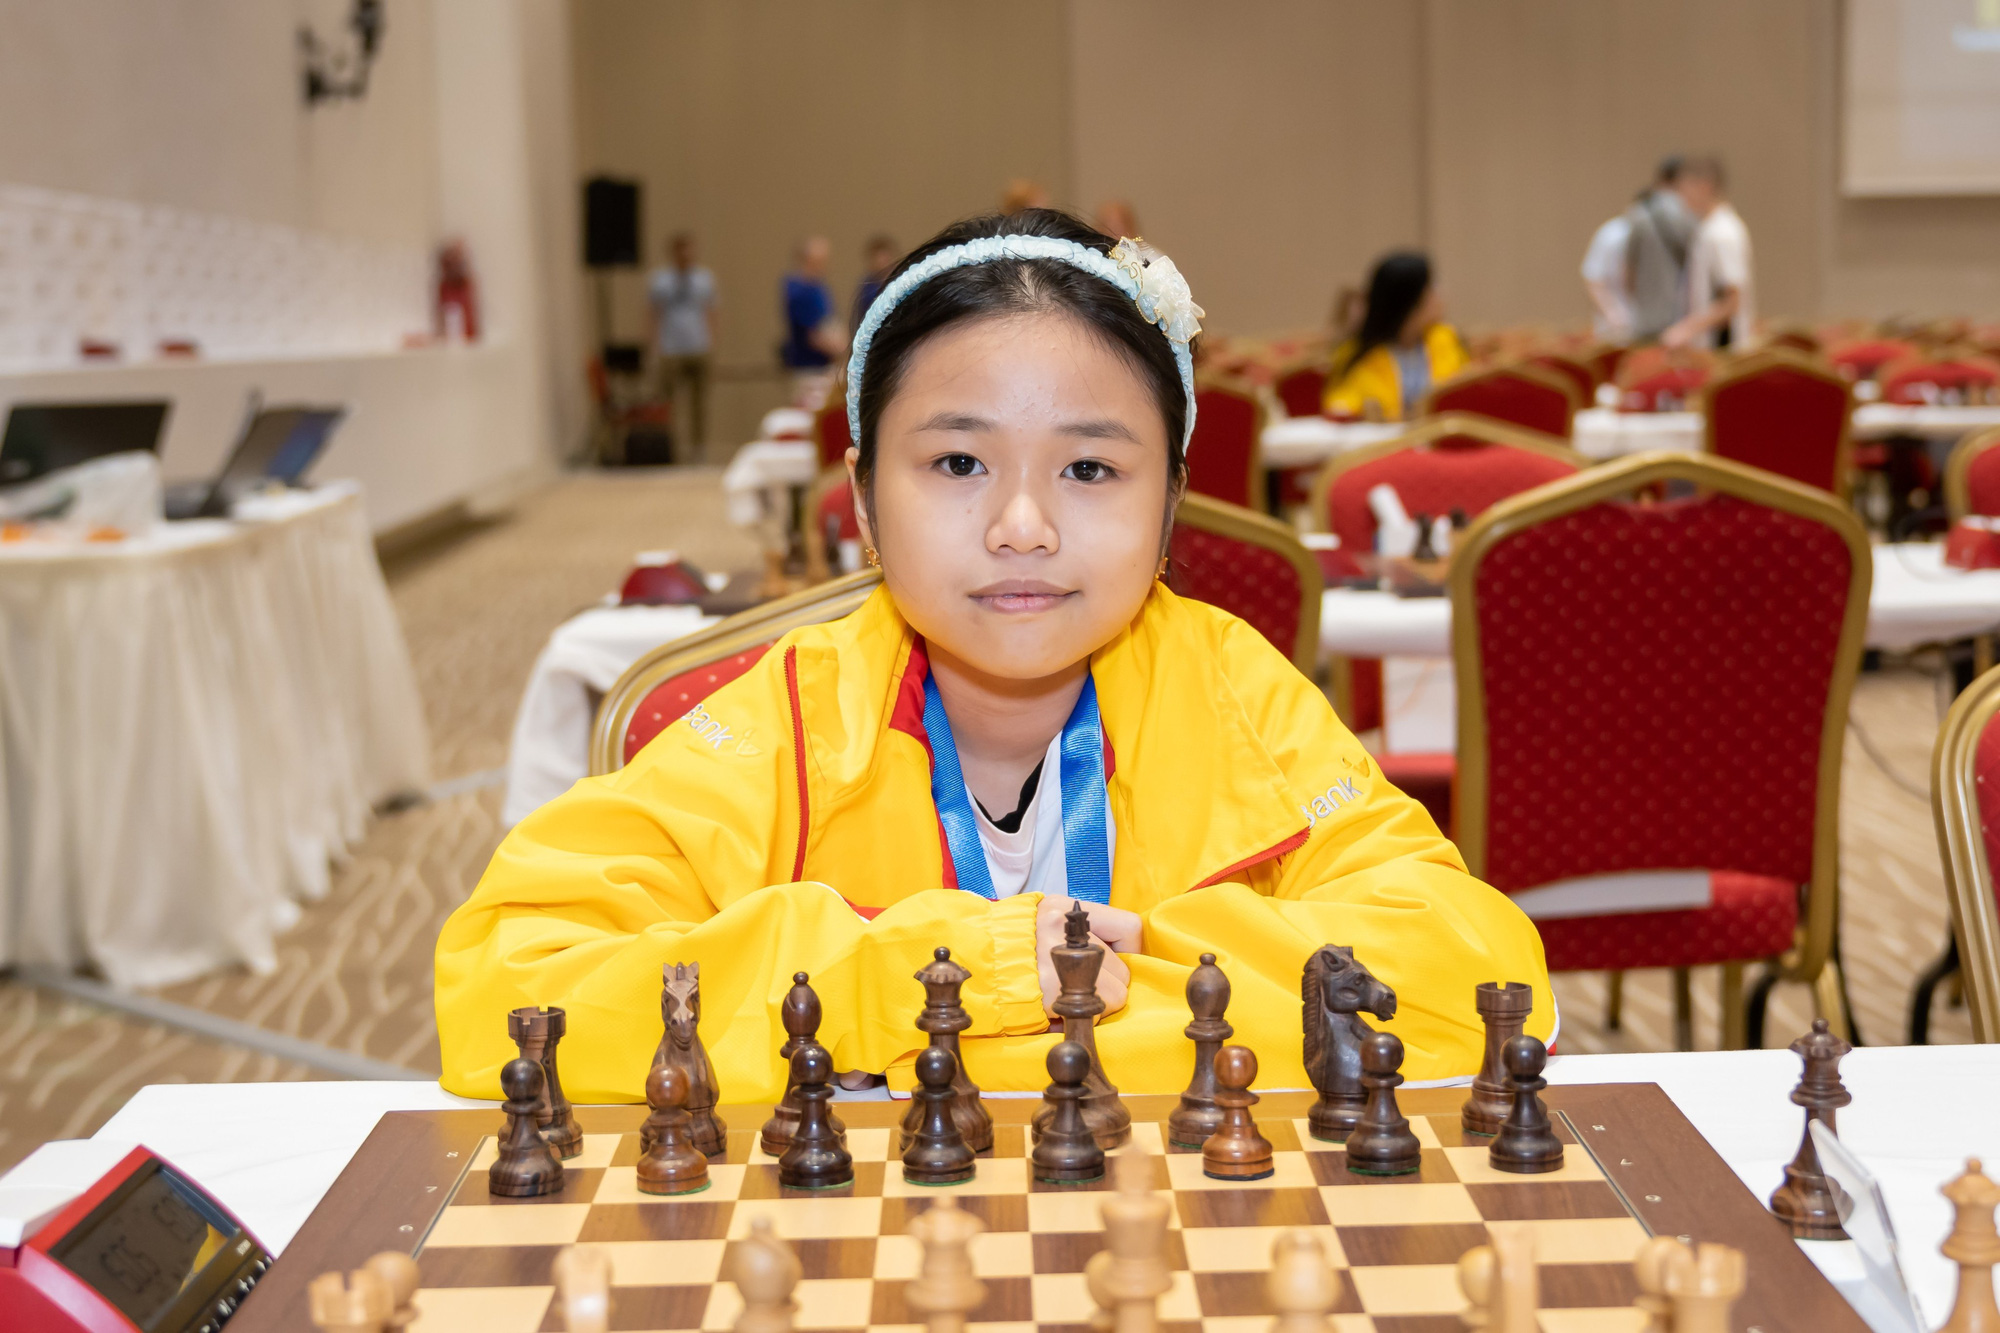 WORLD ONLINE SCHOOL CHESS TOURNAMENT – European Chess Union